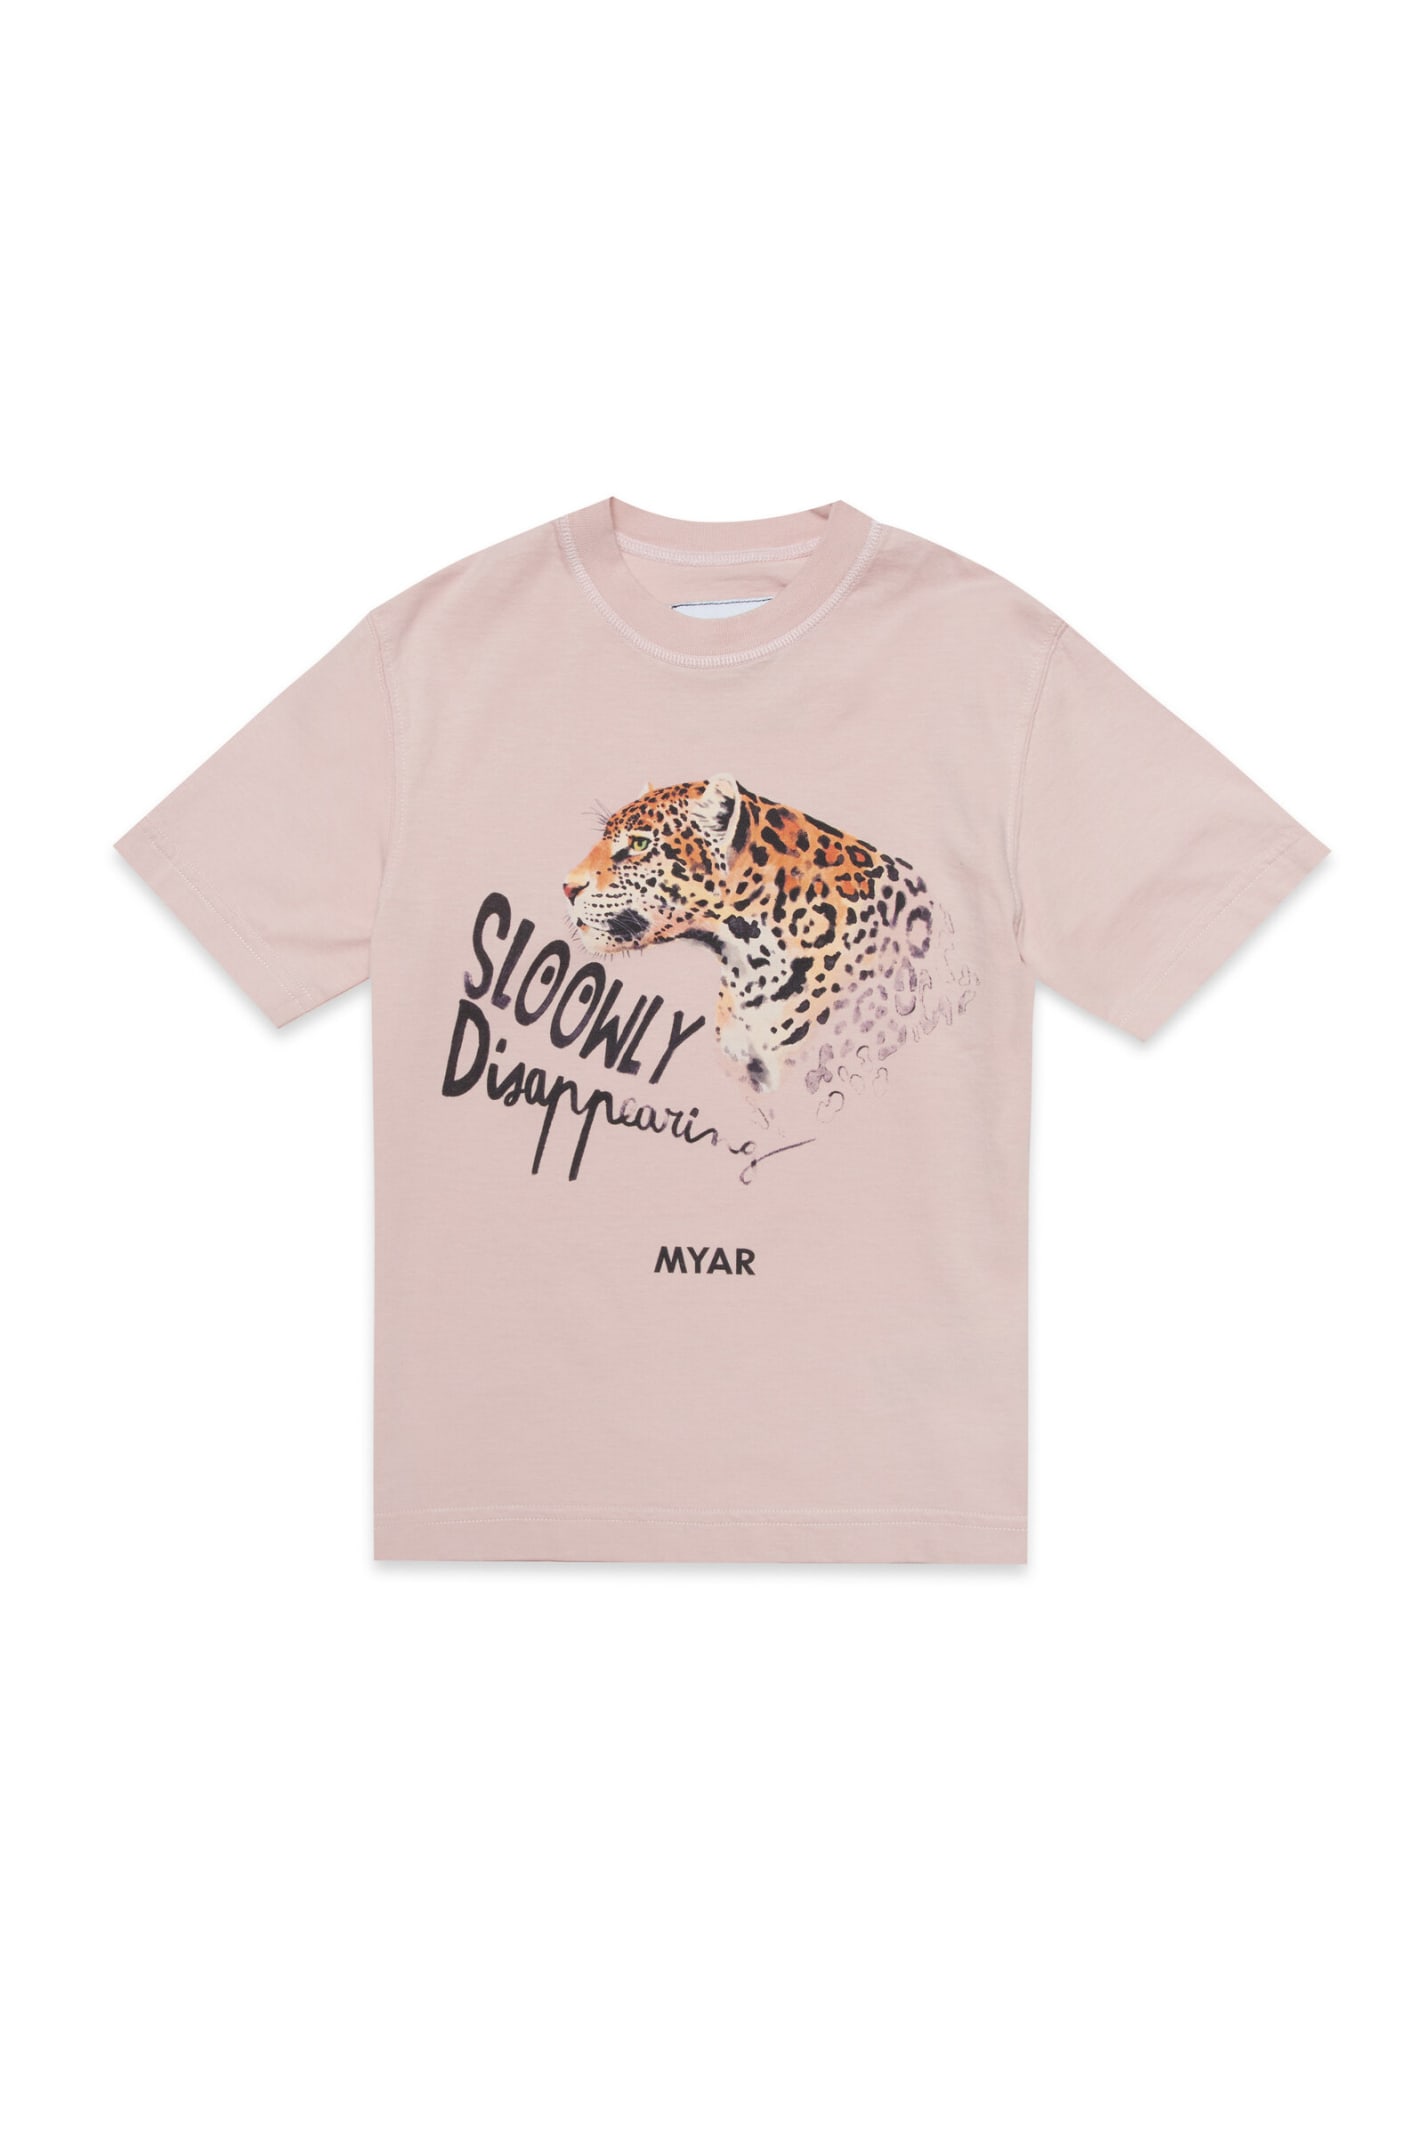 MYAR Myt24u T-shirt Myar Deadstock Pink Fabric Crew-neck T-shirt With Digital Print Sloowly